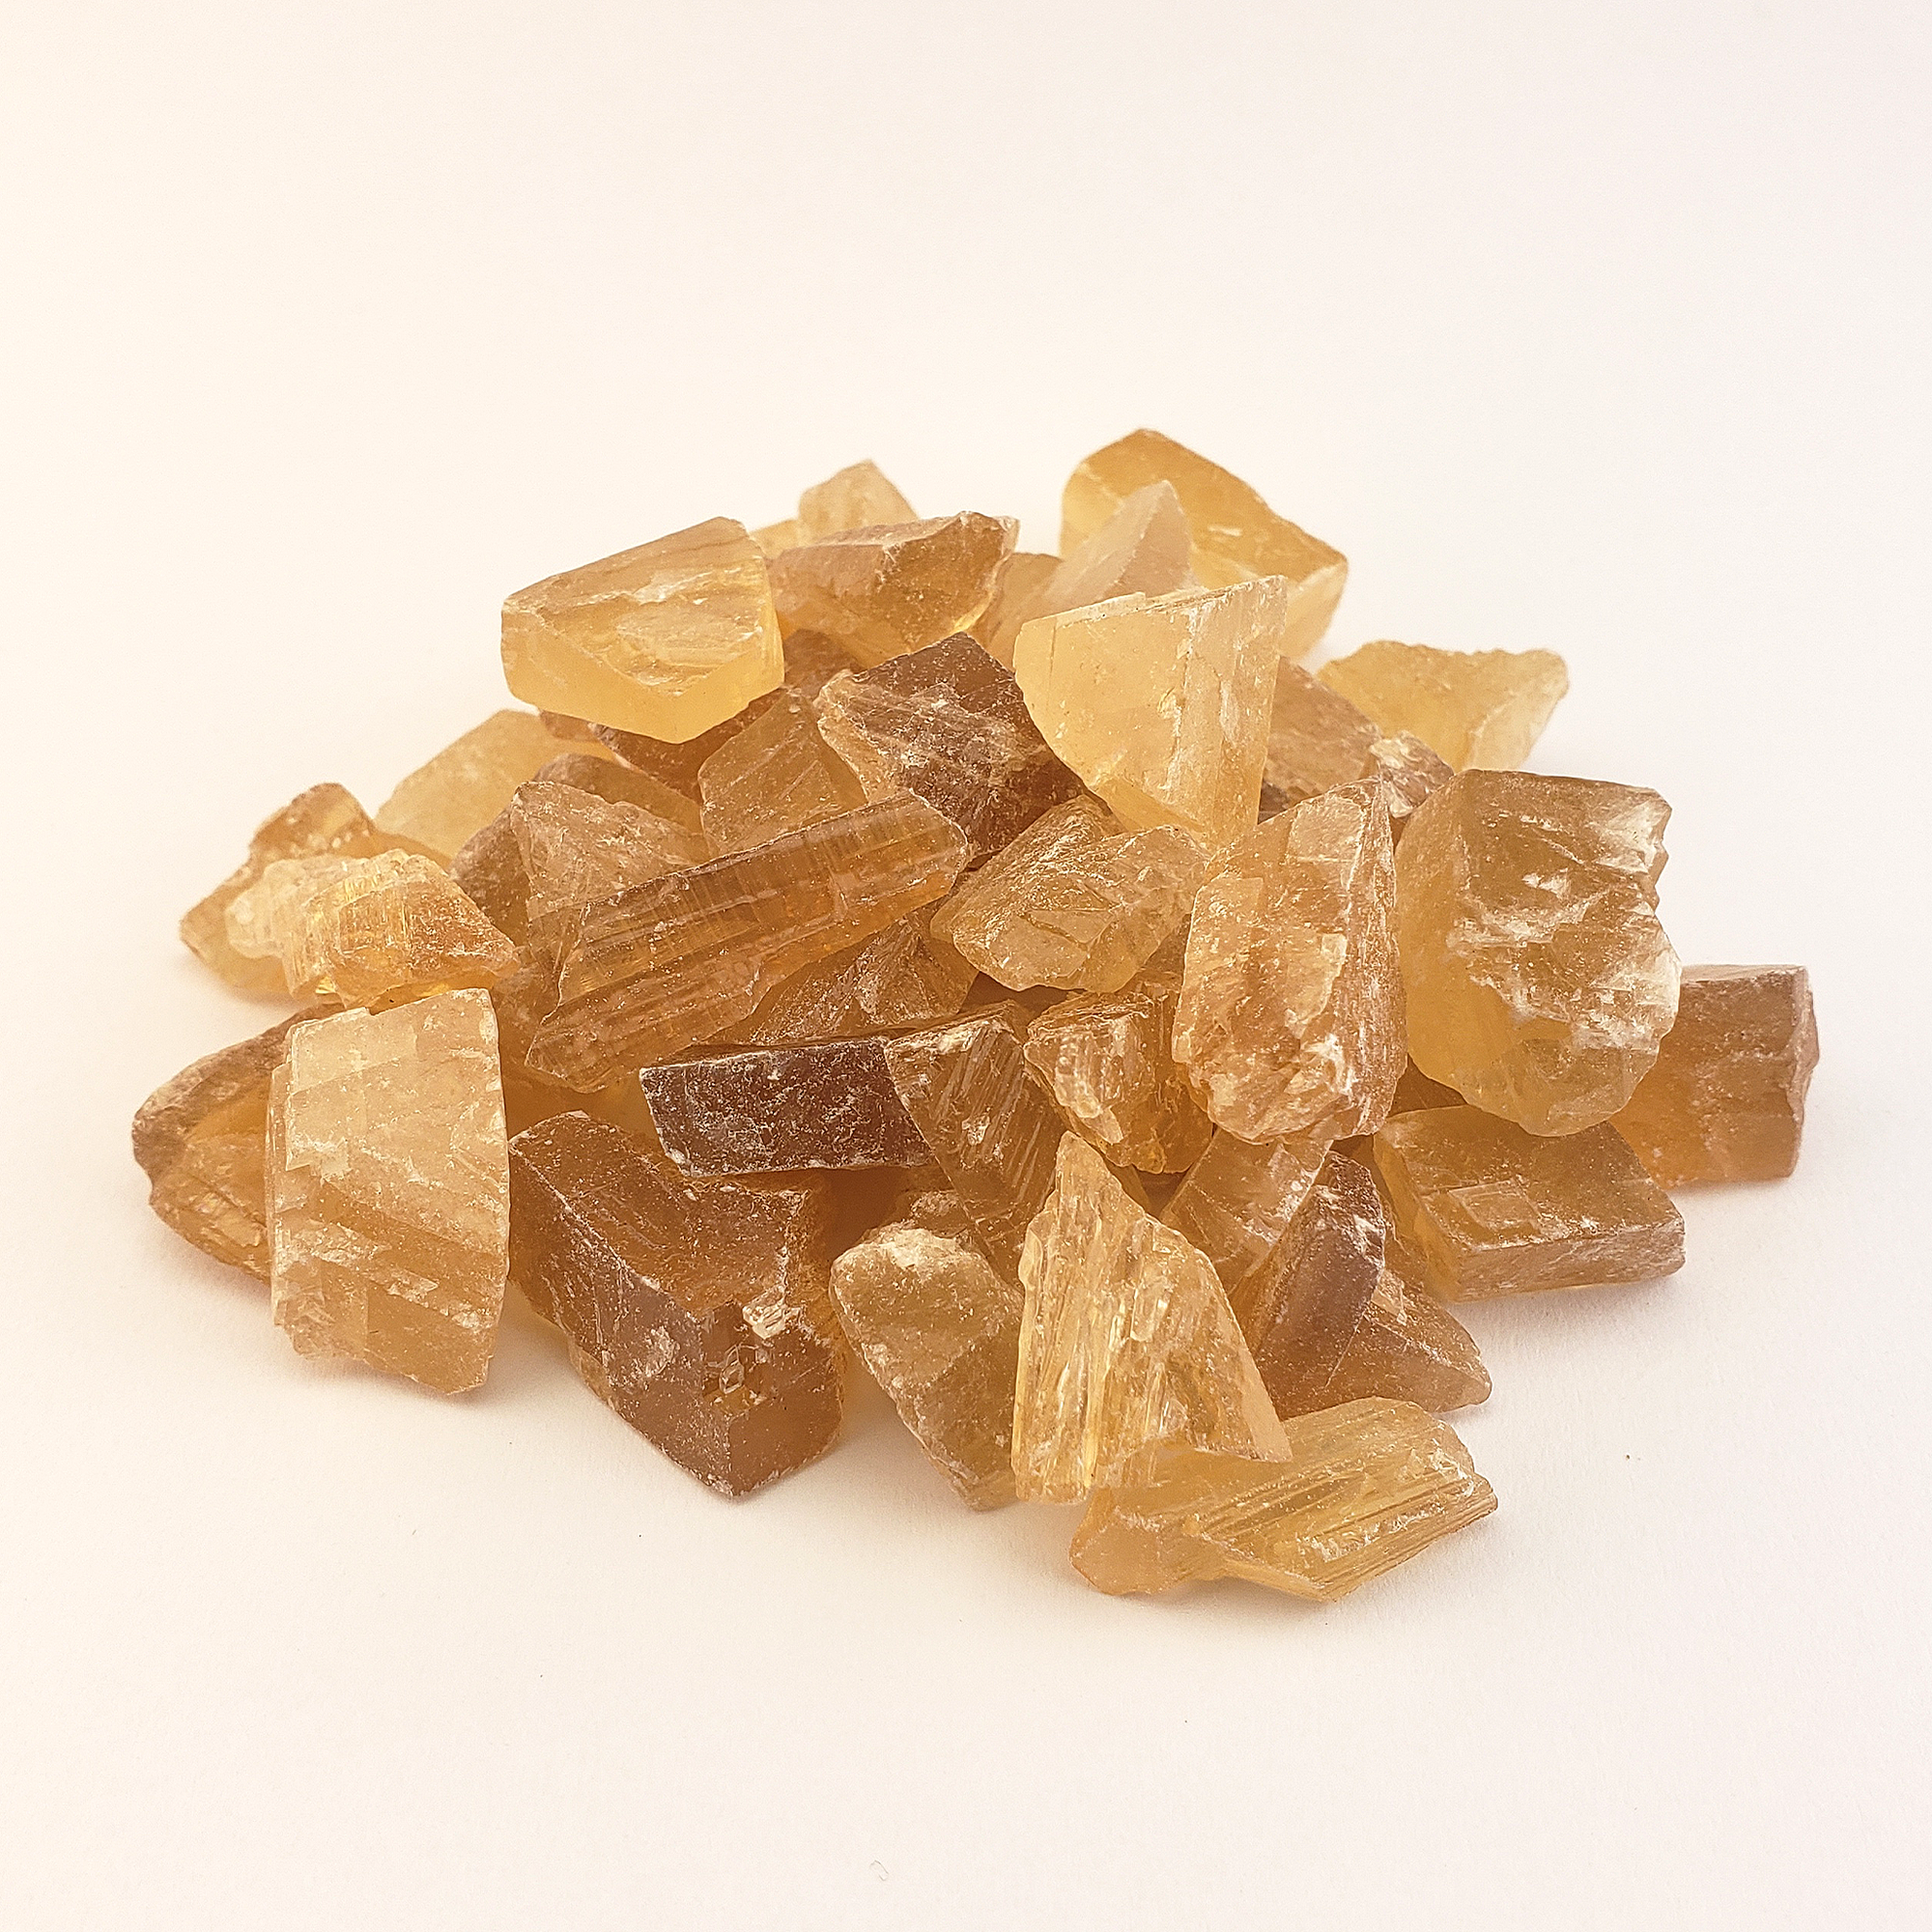 Honey Calcite Natural Raw Crystals Rough Gemstones - 3 Mini Stones - On White Background